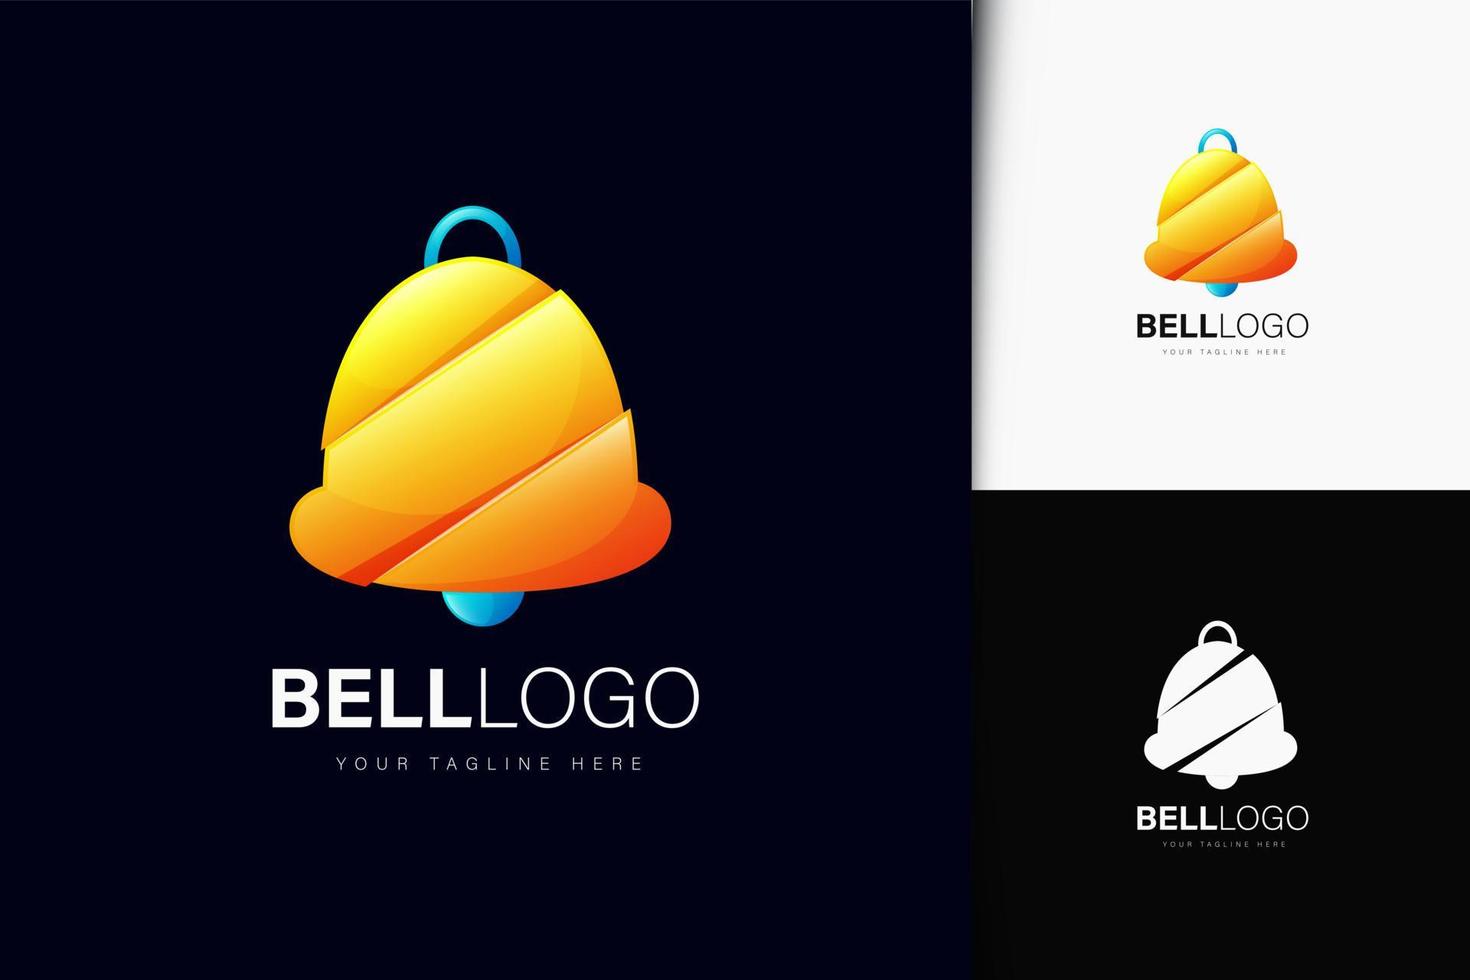 Bell logo design with gradient vector